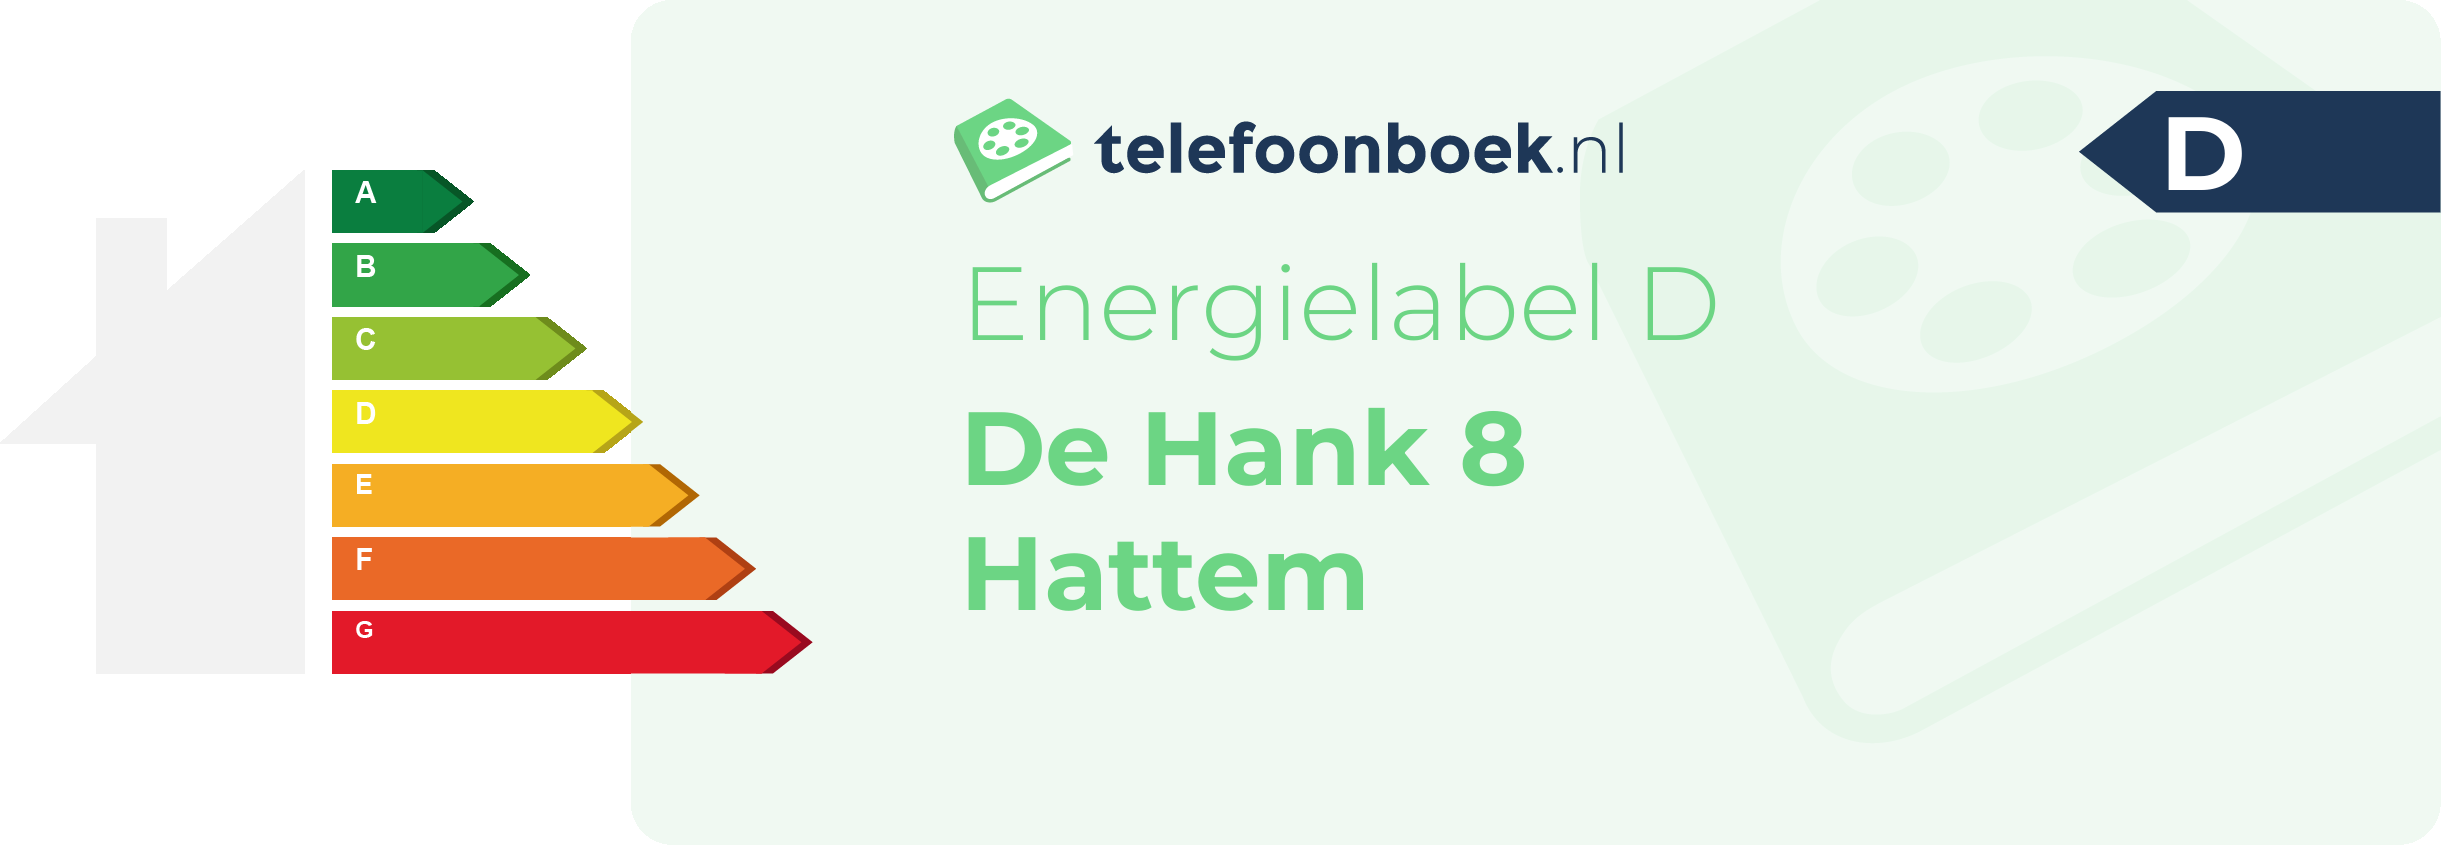 Energielabel De Hank 8 Hattem